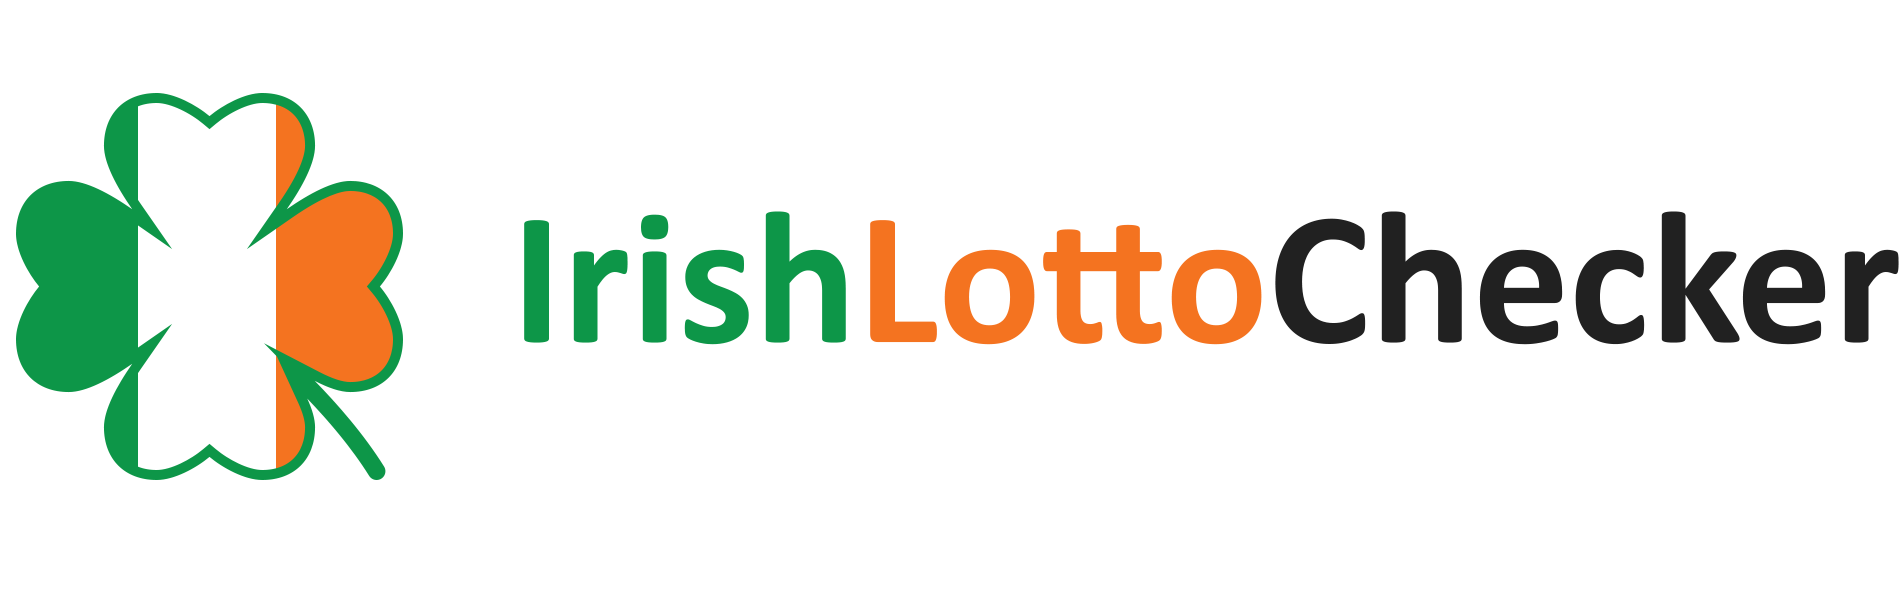 check irish lotto